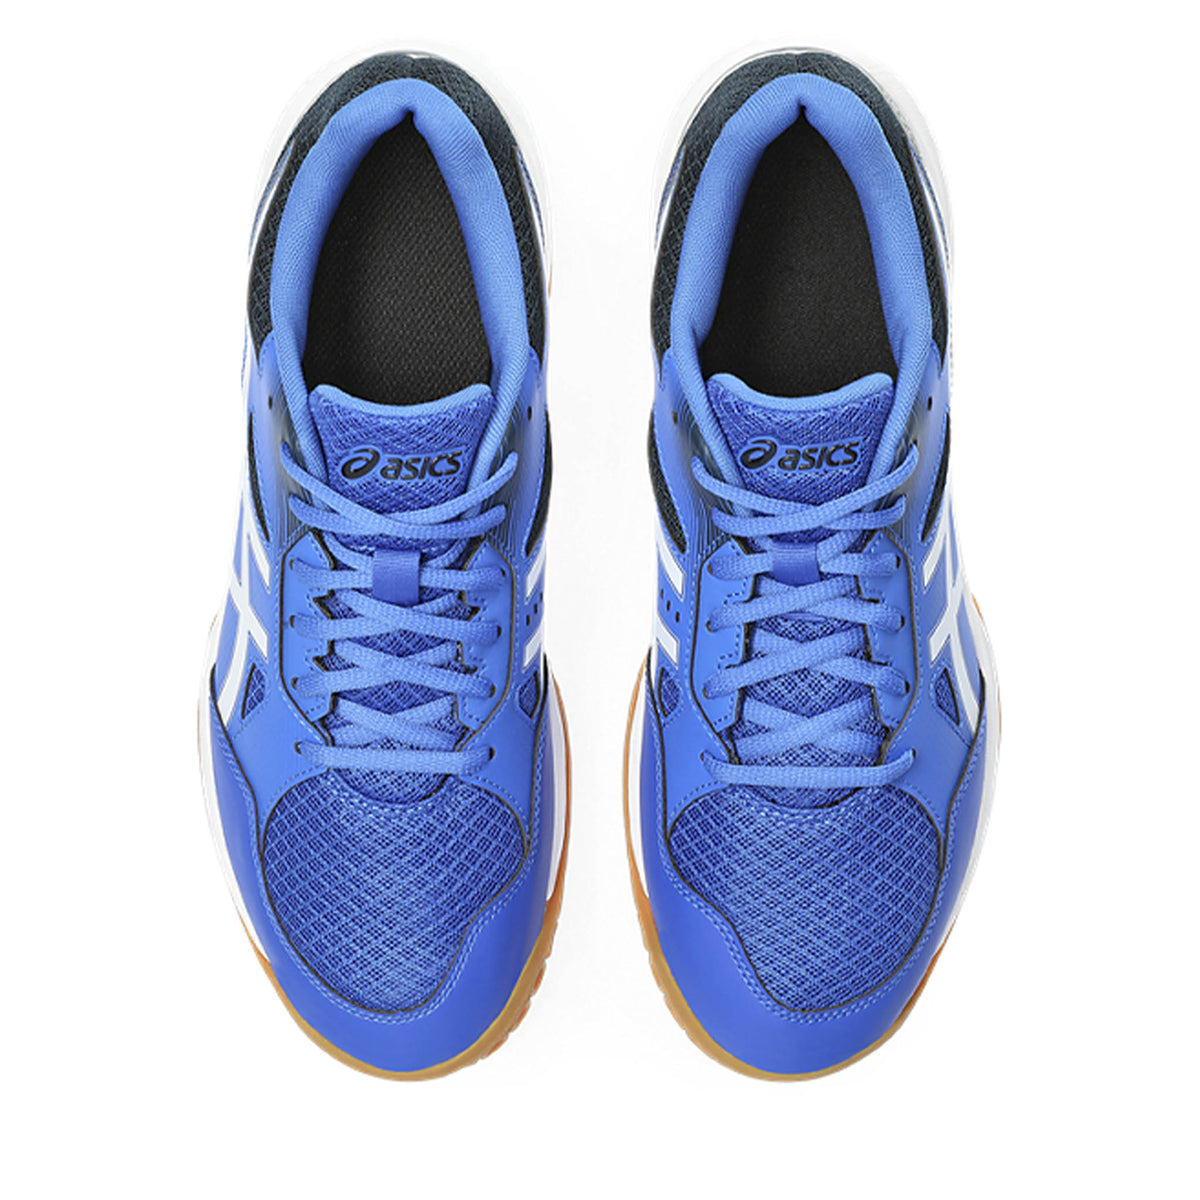 Asics Gel Task 3 Mens Indoor Court Shoes: Illusion Blue/White